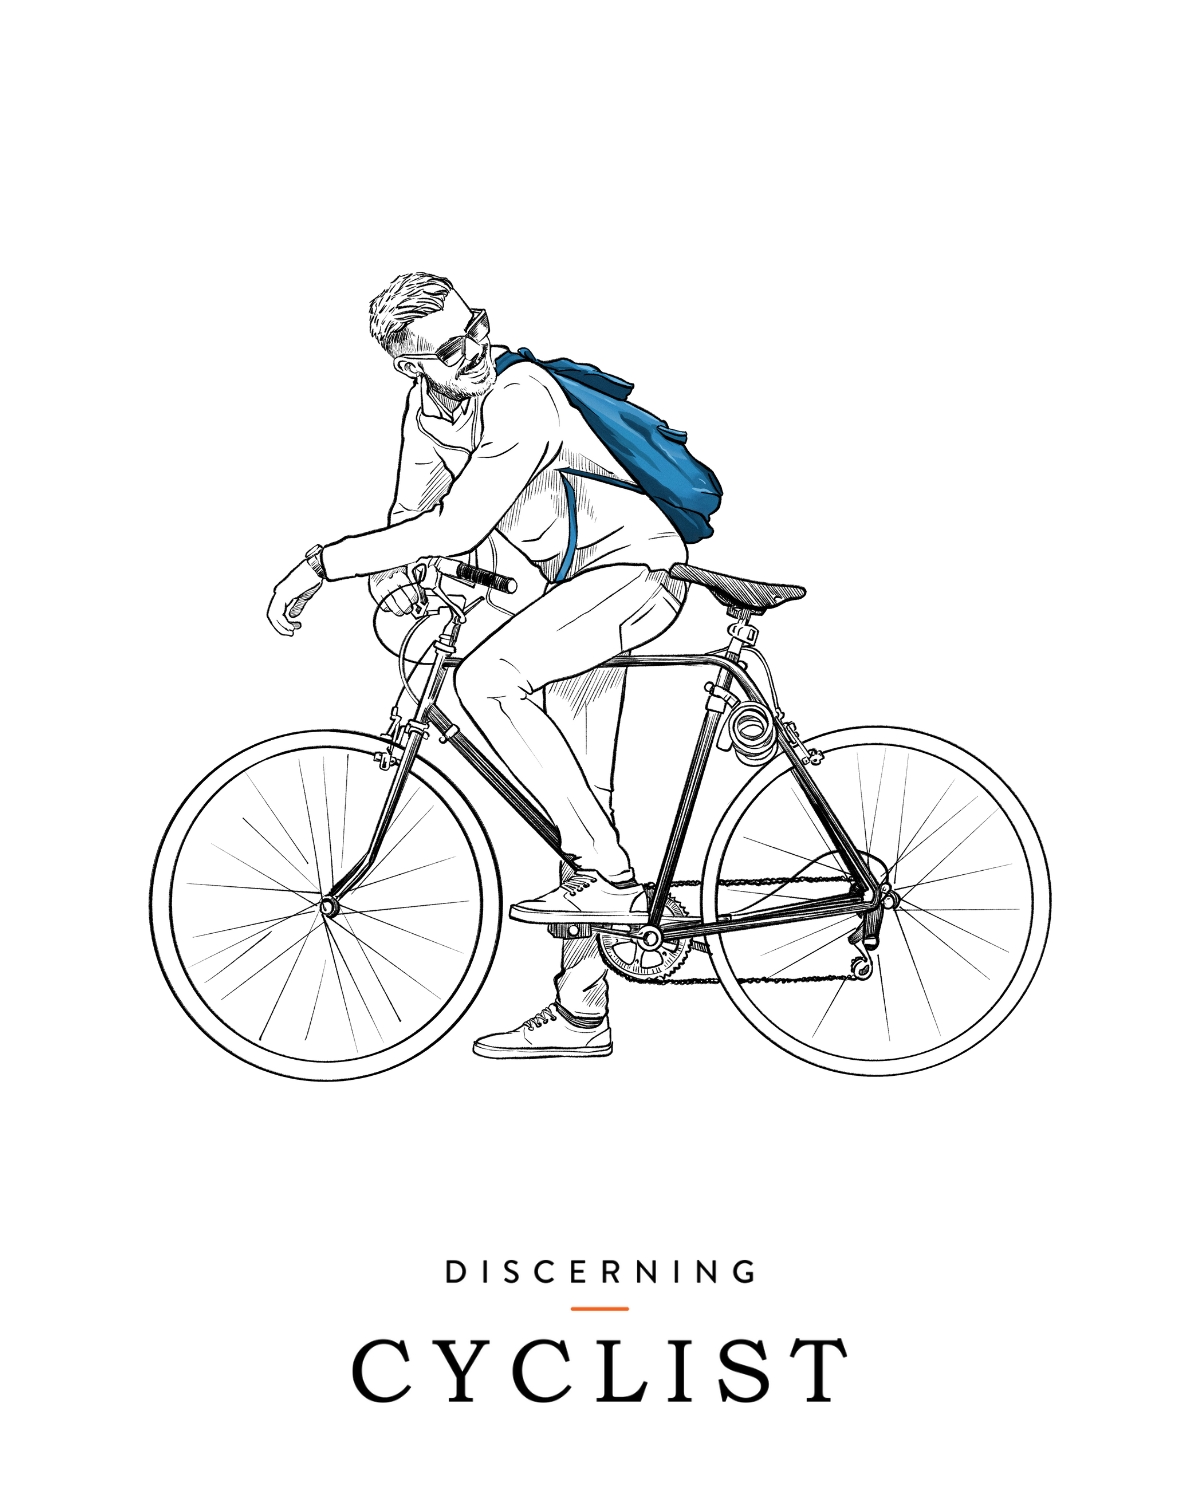 Smiling cyclist illustration